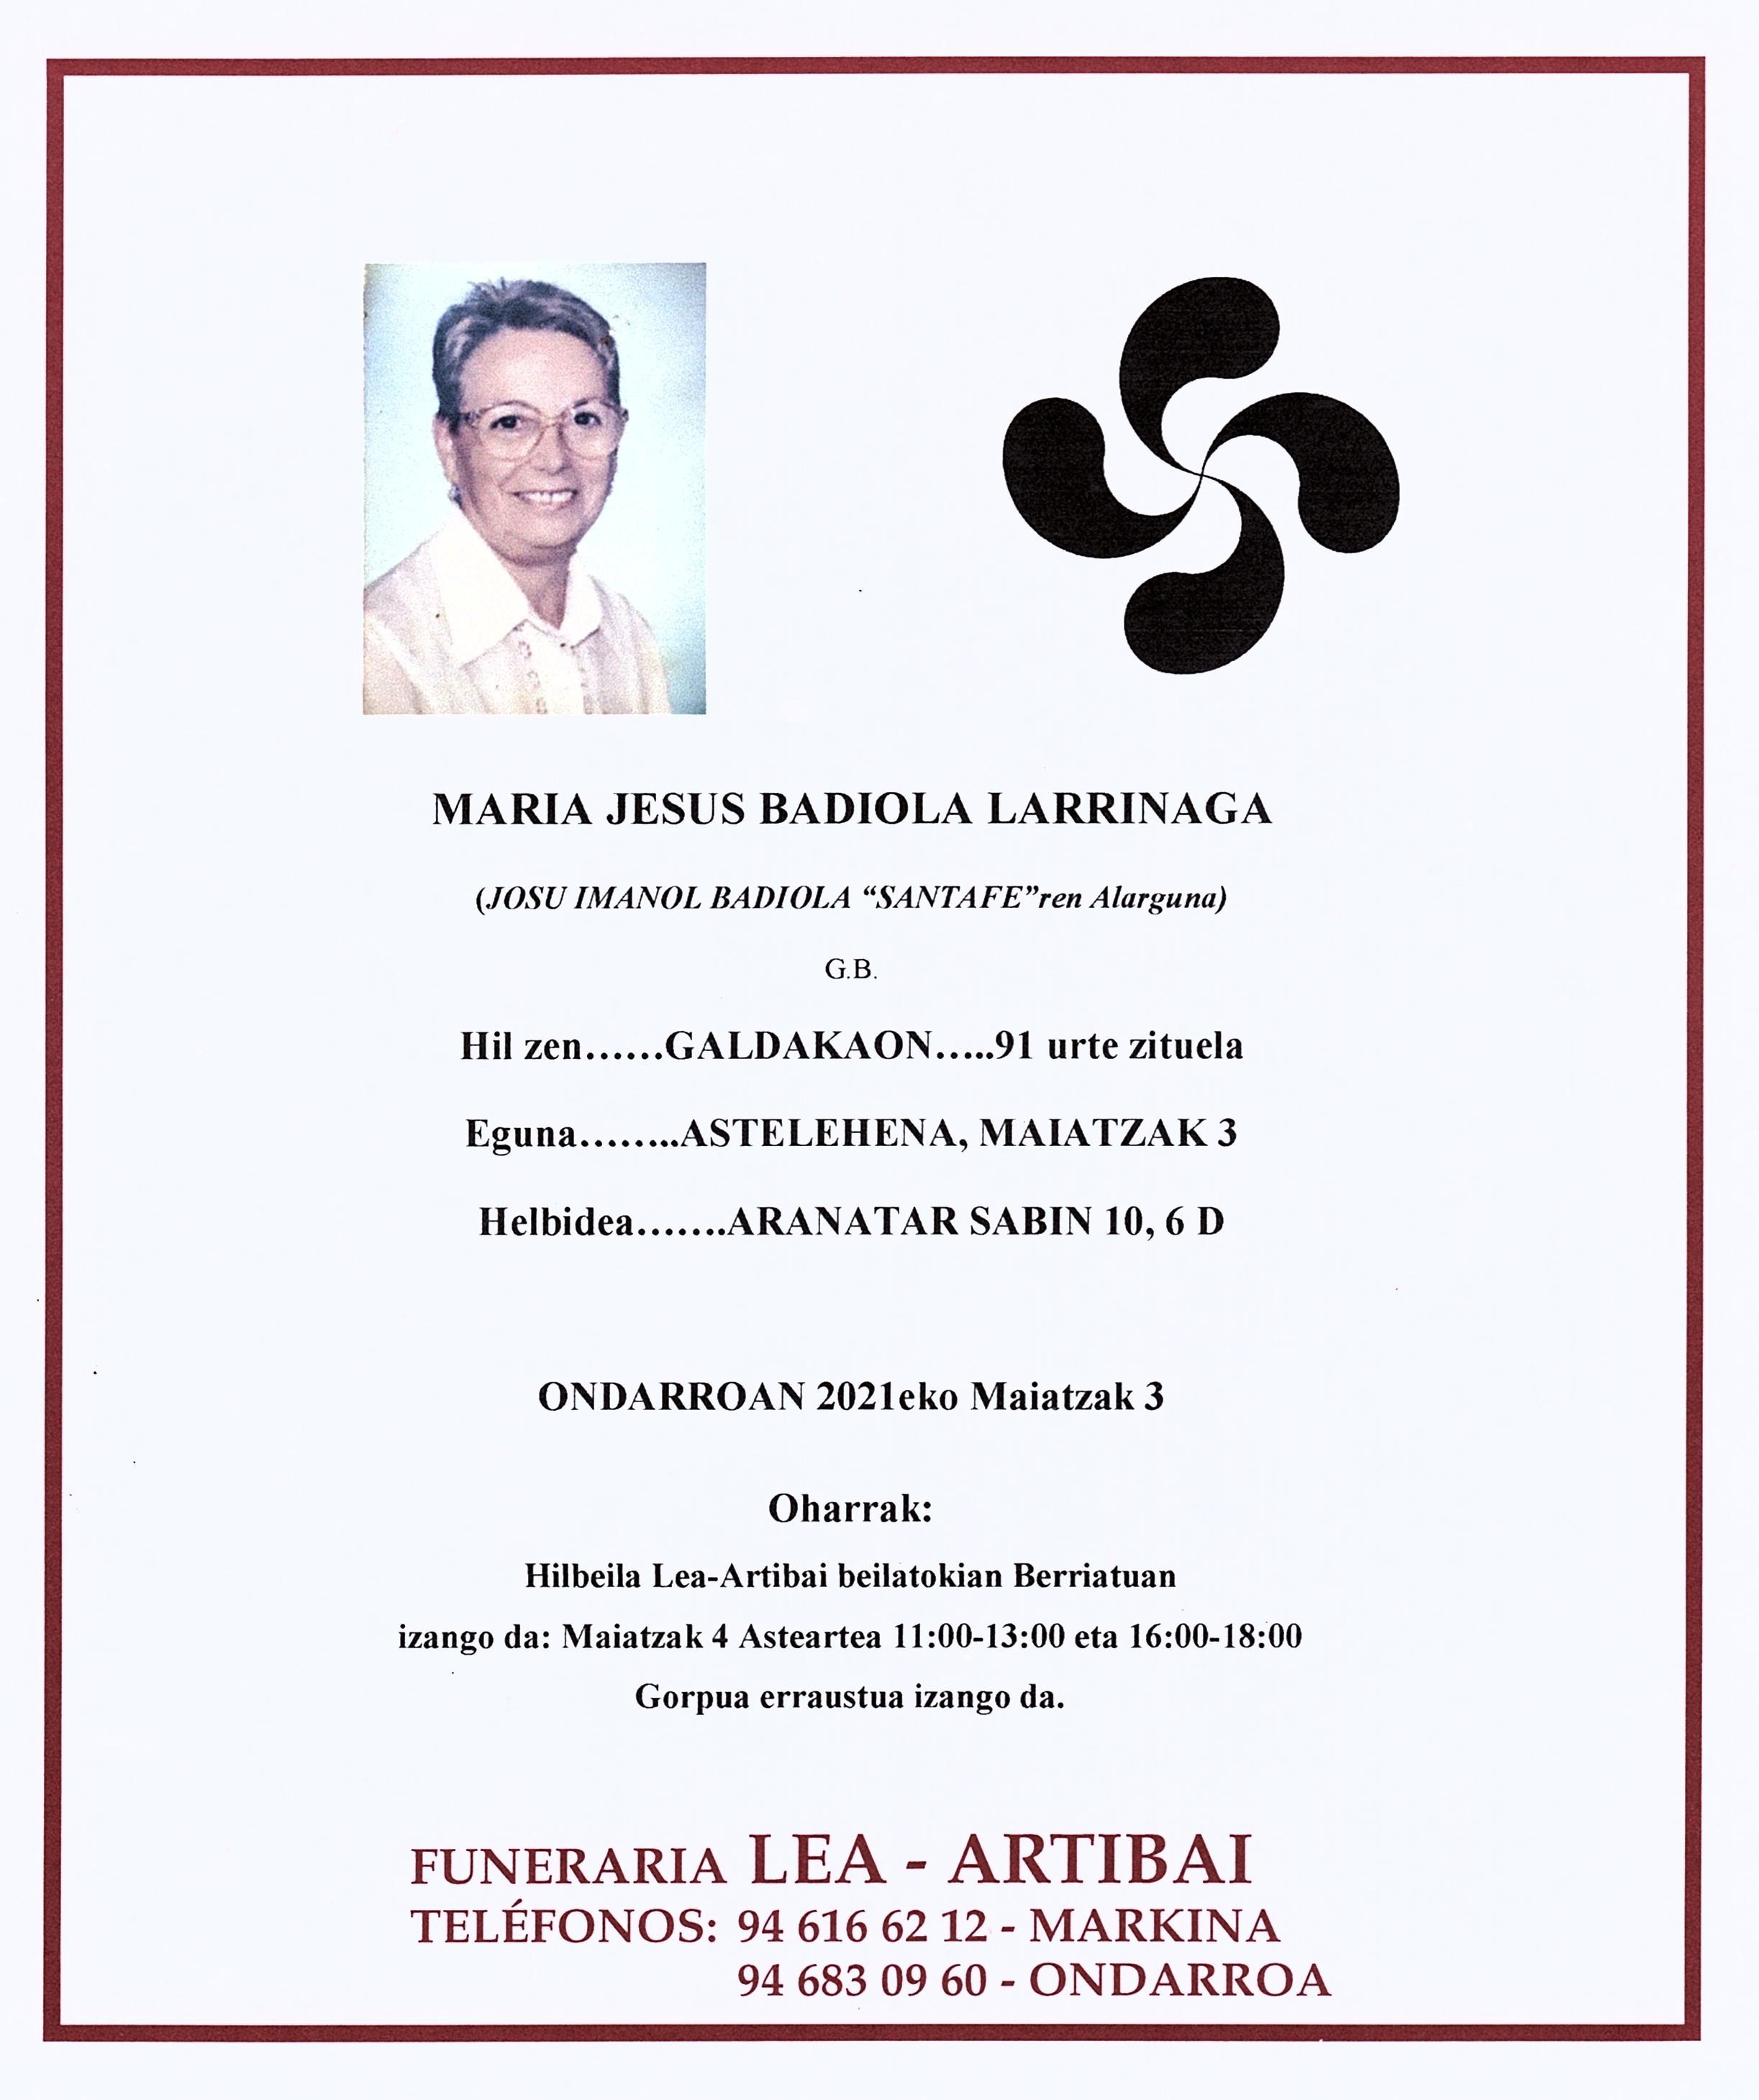 Maria Jesus Badiola Larrinaga